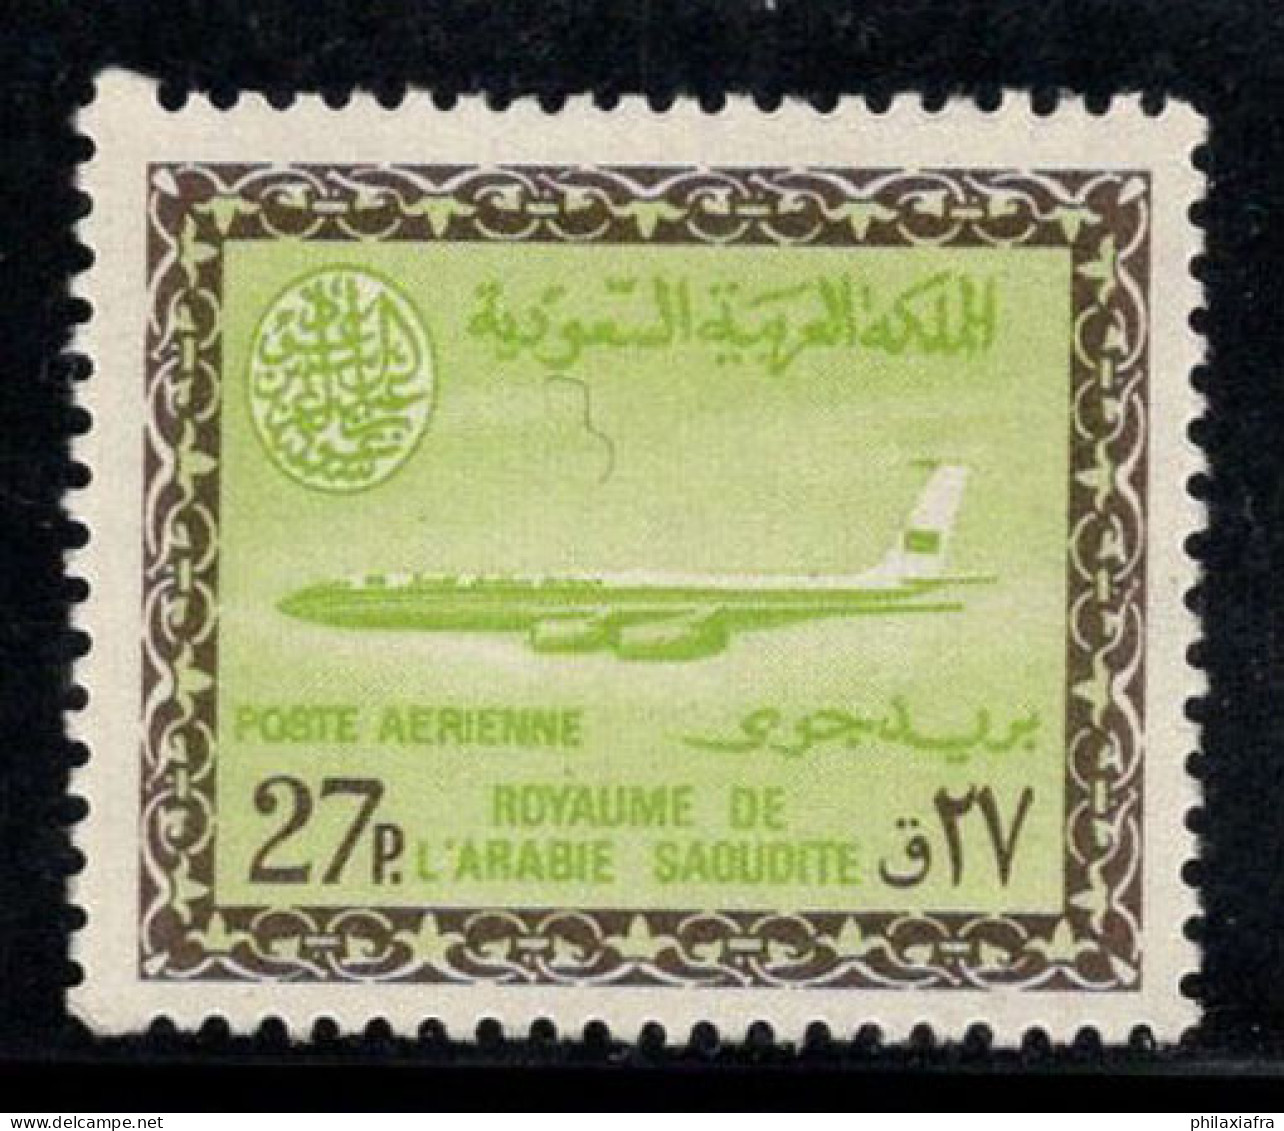 Arabie Saoudite 1965-72 Mi. 264 Neuf ** 100% Poste Aérienne 27 Pia, Boeing 720 B - Arabie Saoudite